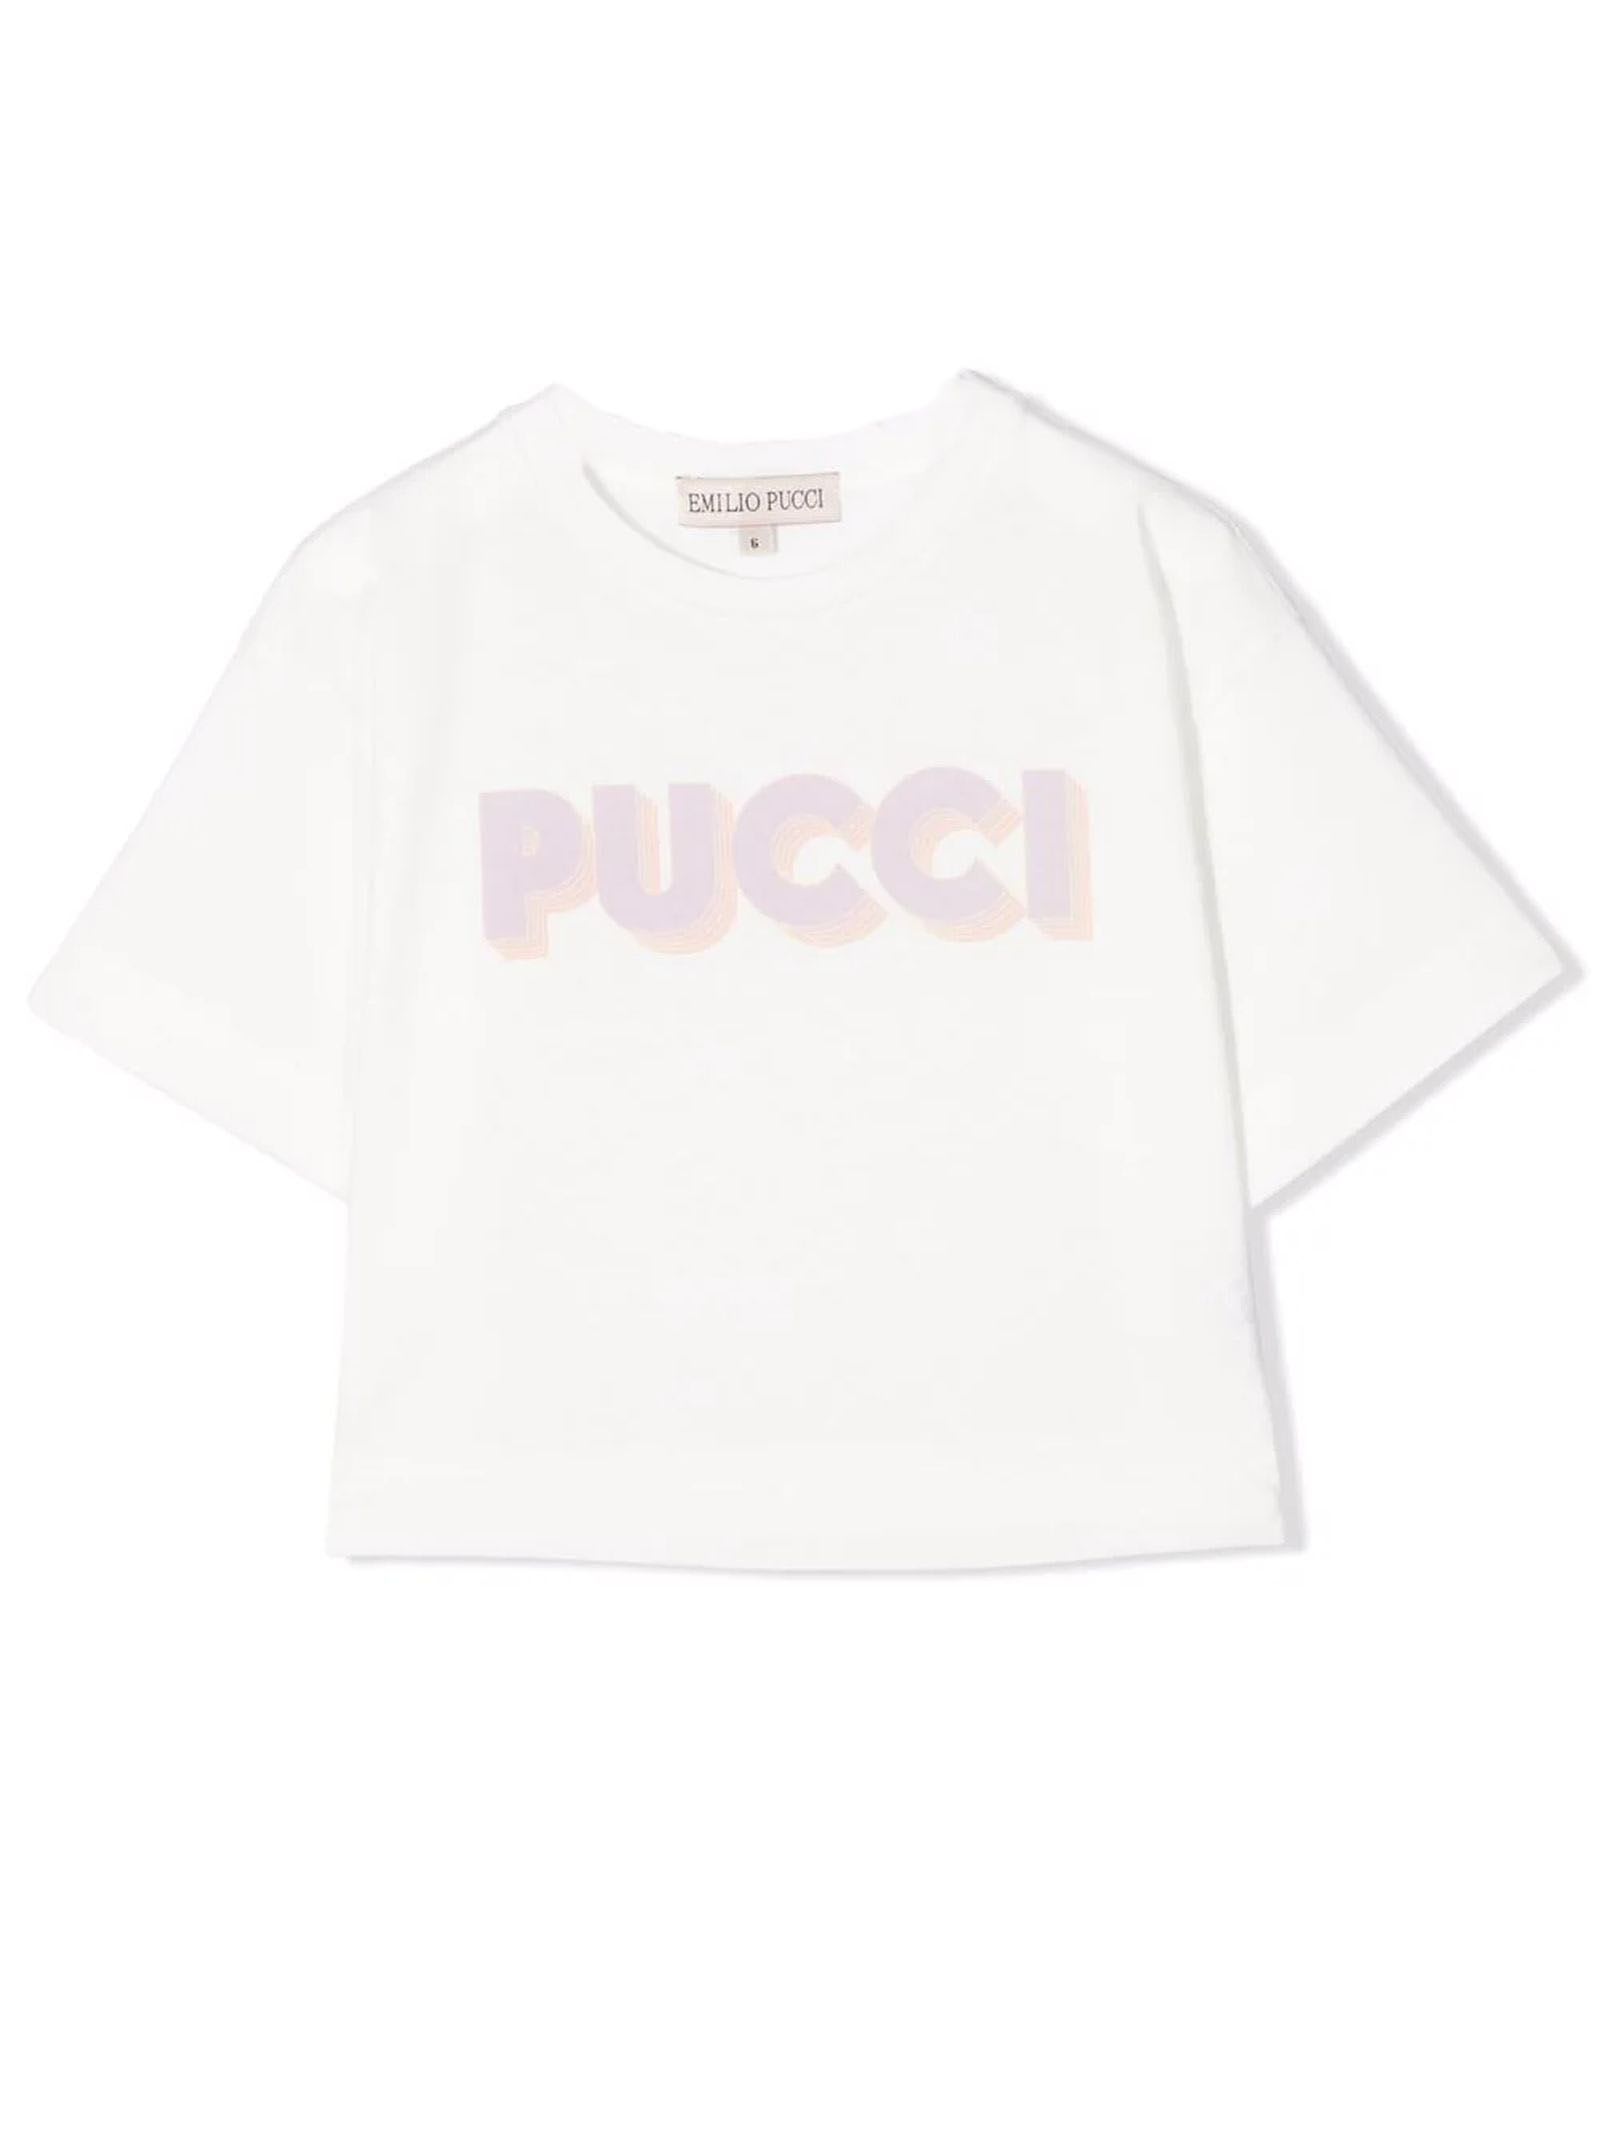 Emilio Pucci White Cotton Tshirt